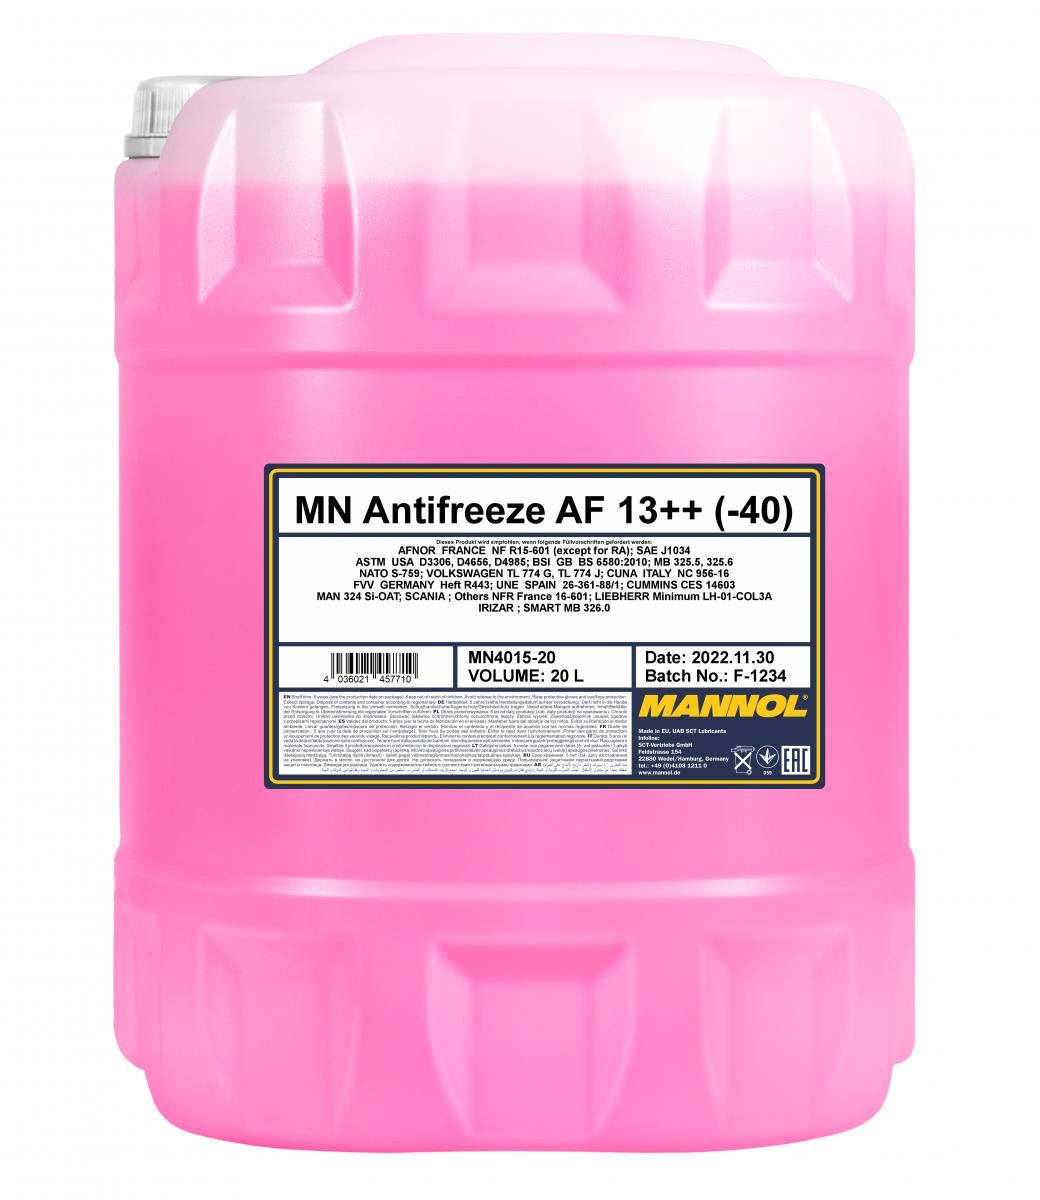 CPI ARAGON Kühlmittel G12 Rot, 20l MANNOL AF13++, High-performance MN4015-20